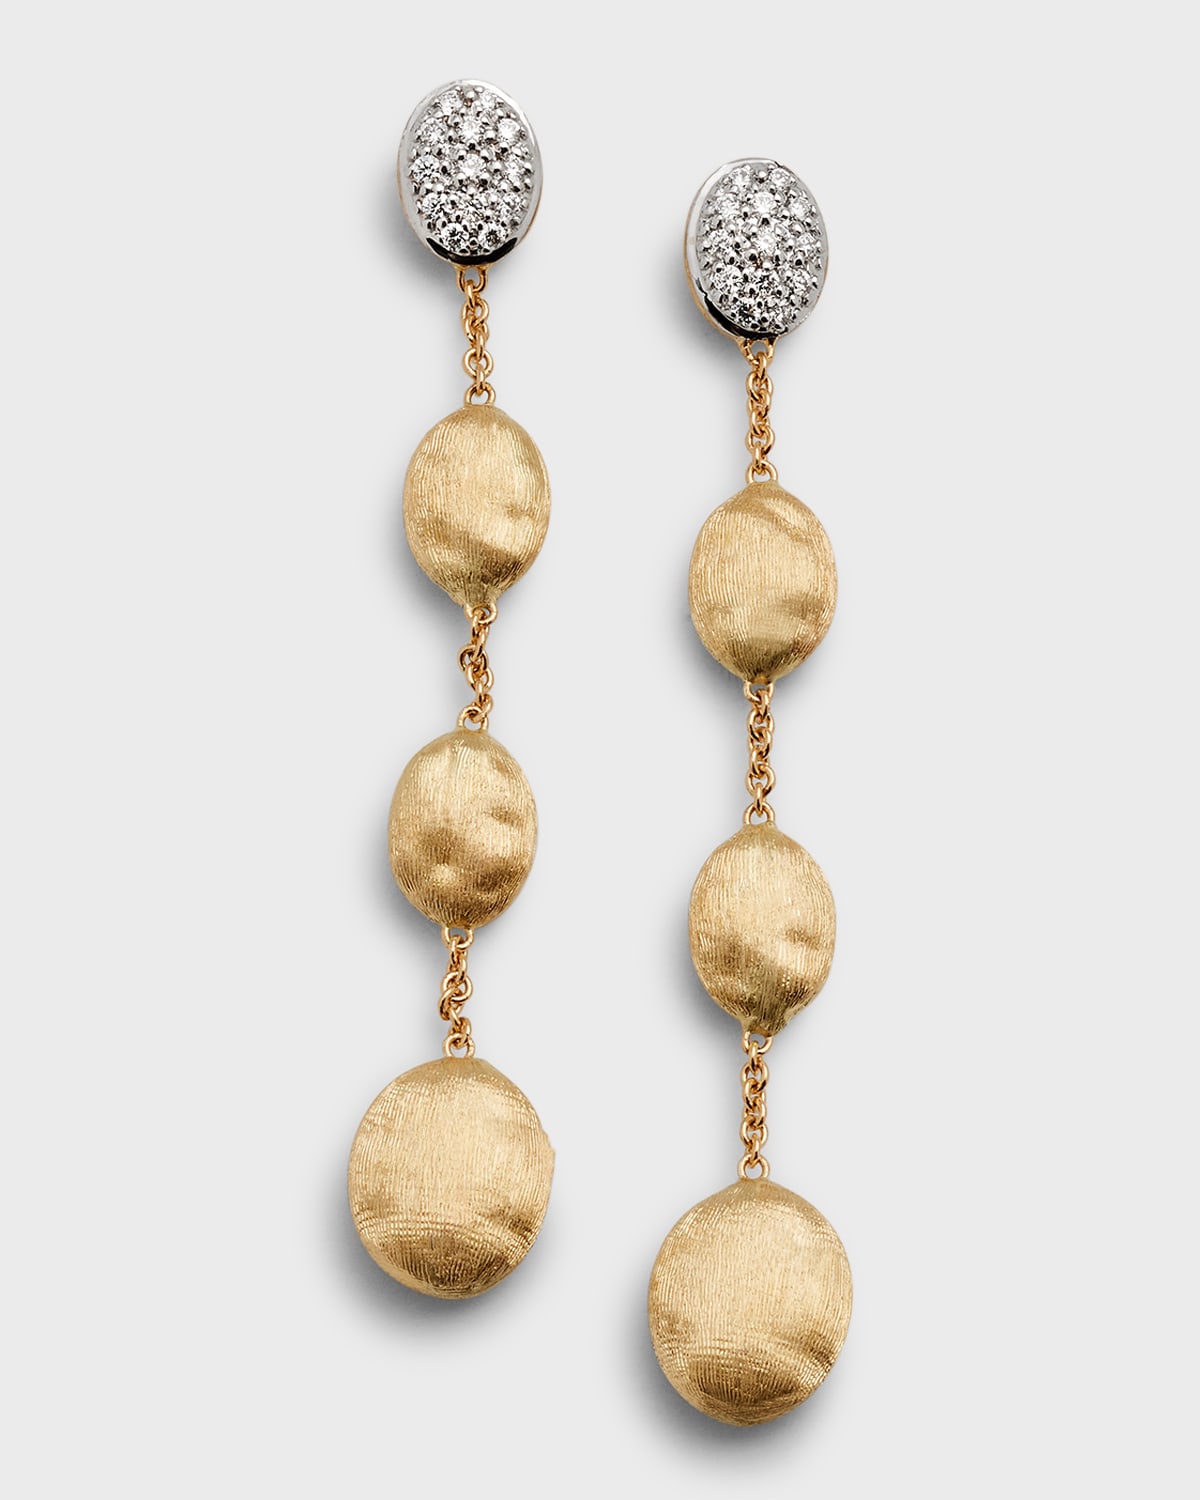 Dangling 18k Gold Earrings with Diamonds